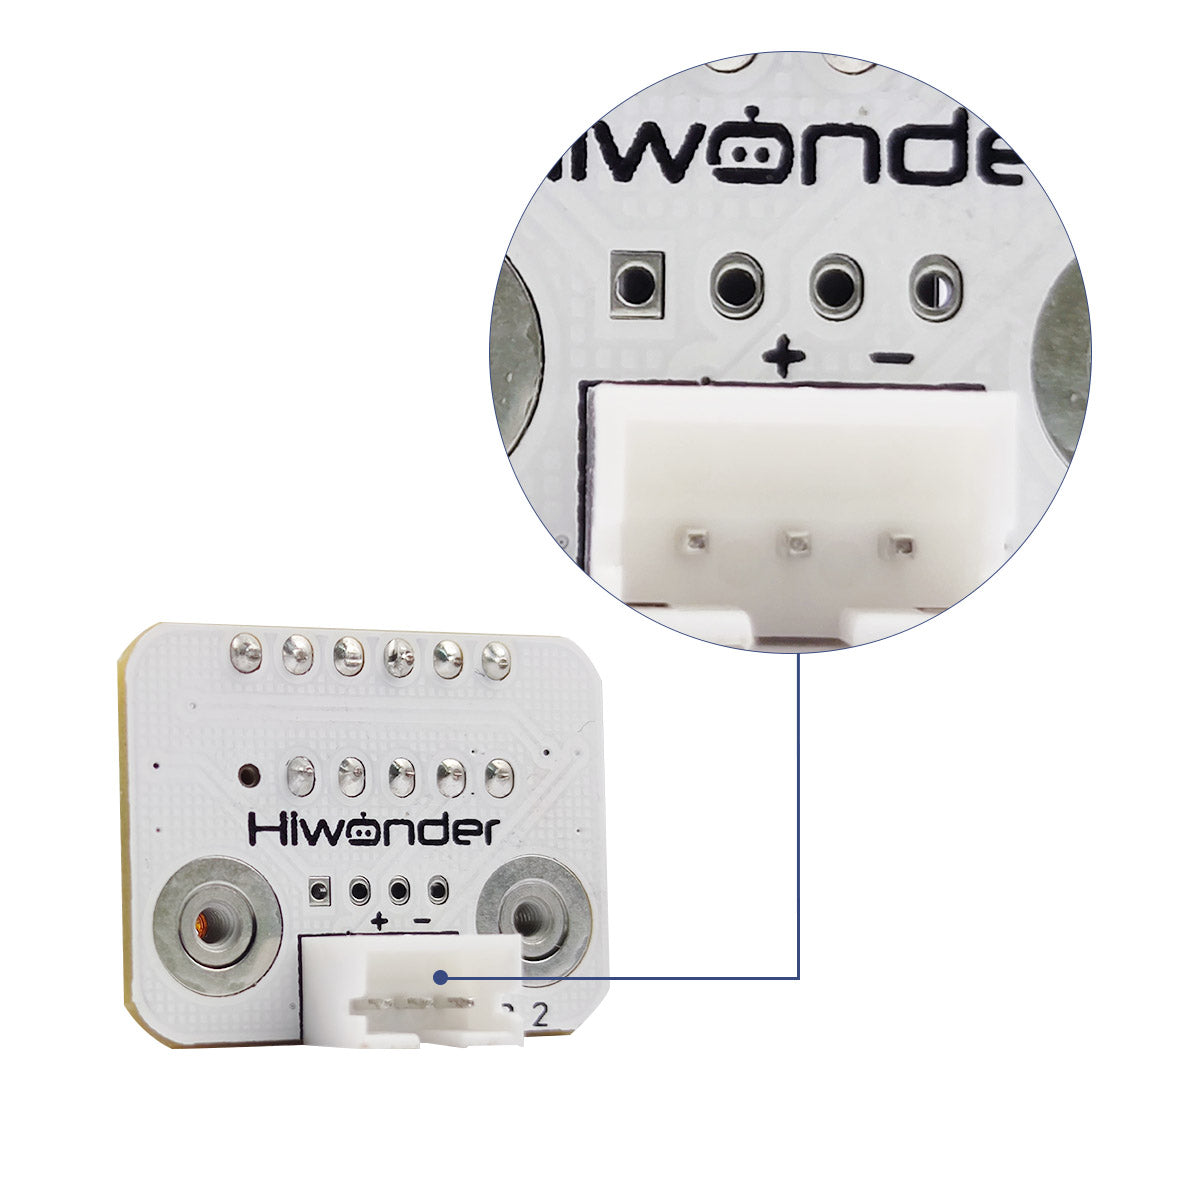 Hiwonder Voltage Display Module Compatible with Hiwonder Robot